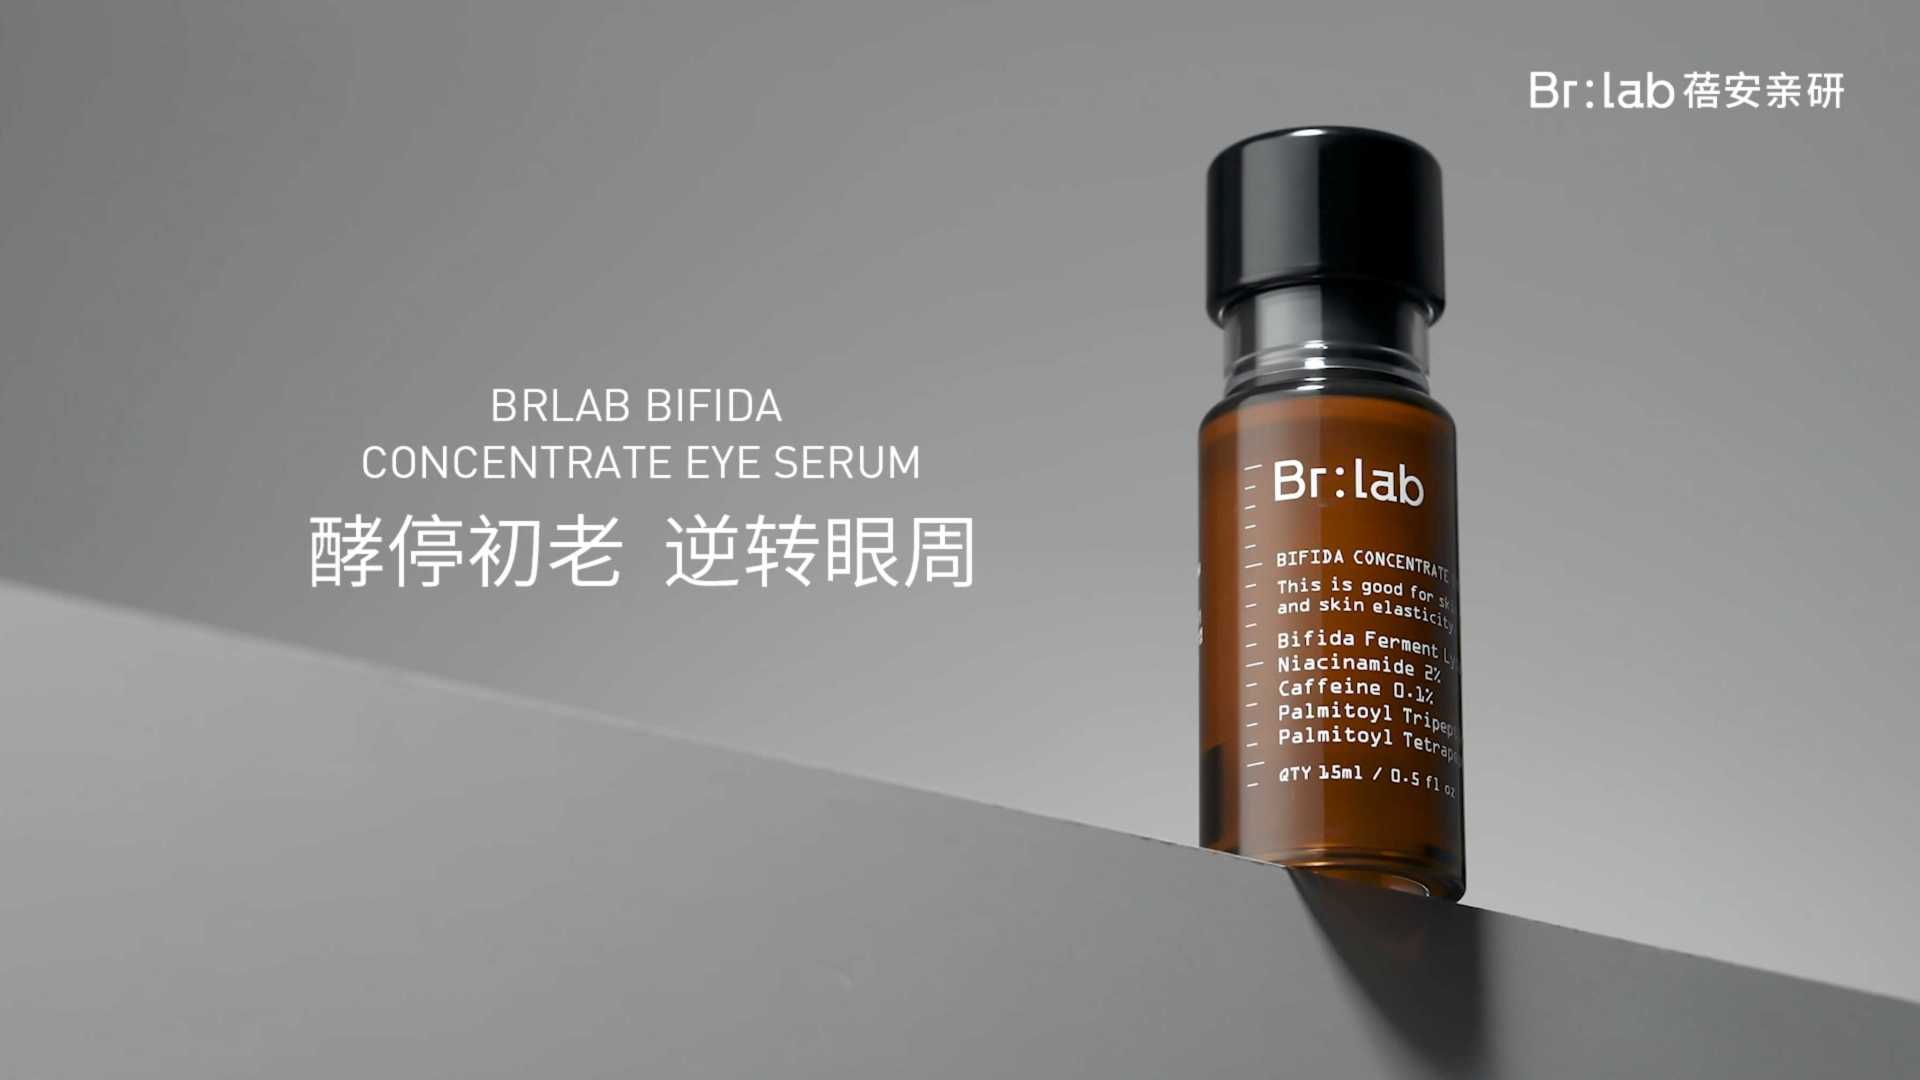 「BRlab 眼精华」品宣视频 ✖ WEALD Studio